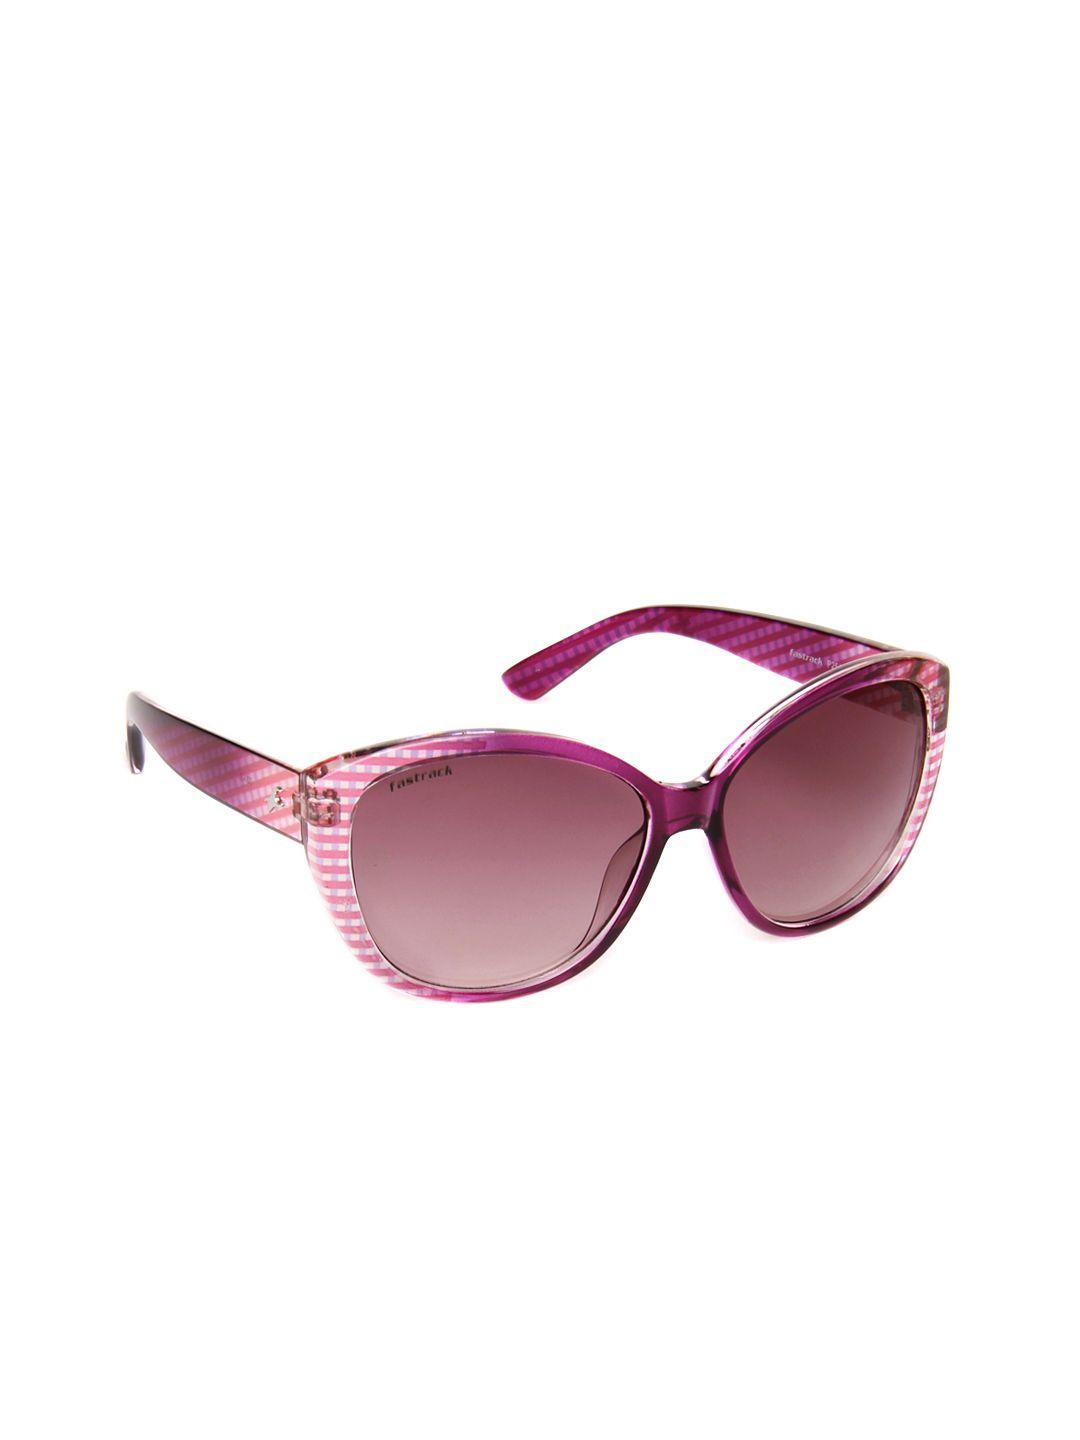 fastrack-women-gradient-sunglasses-p254pk2f